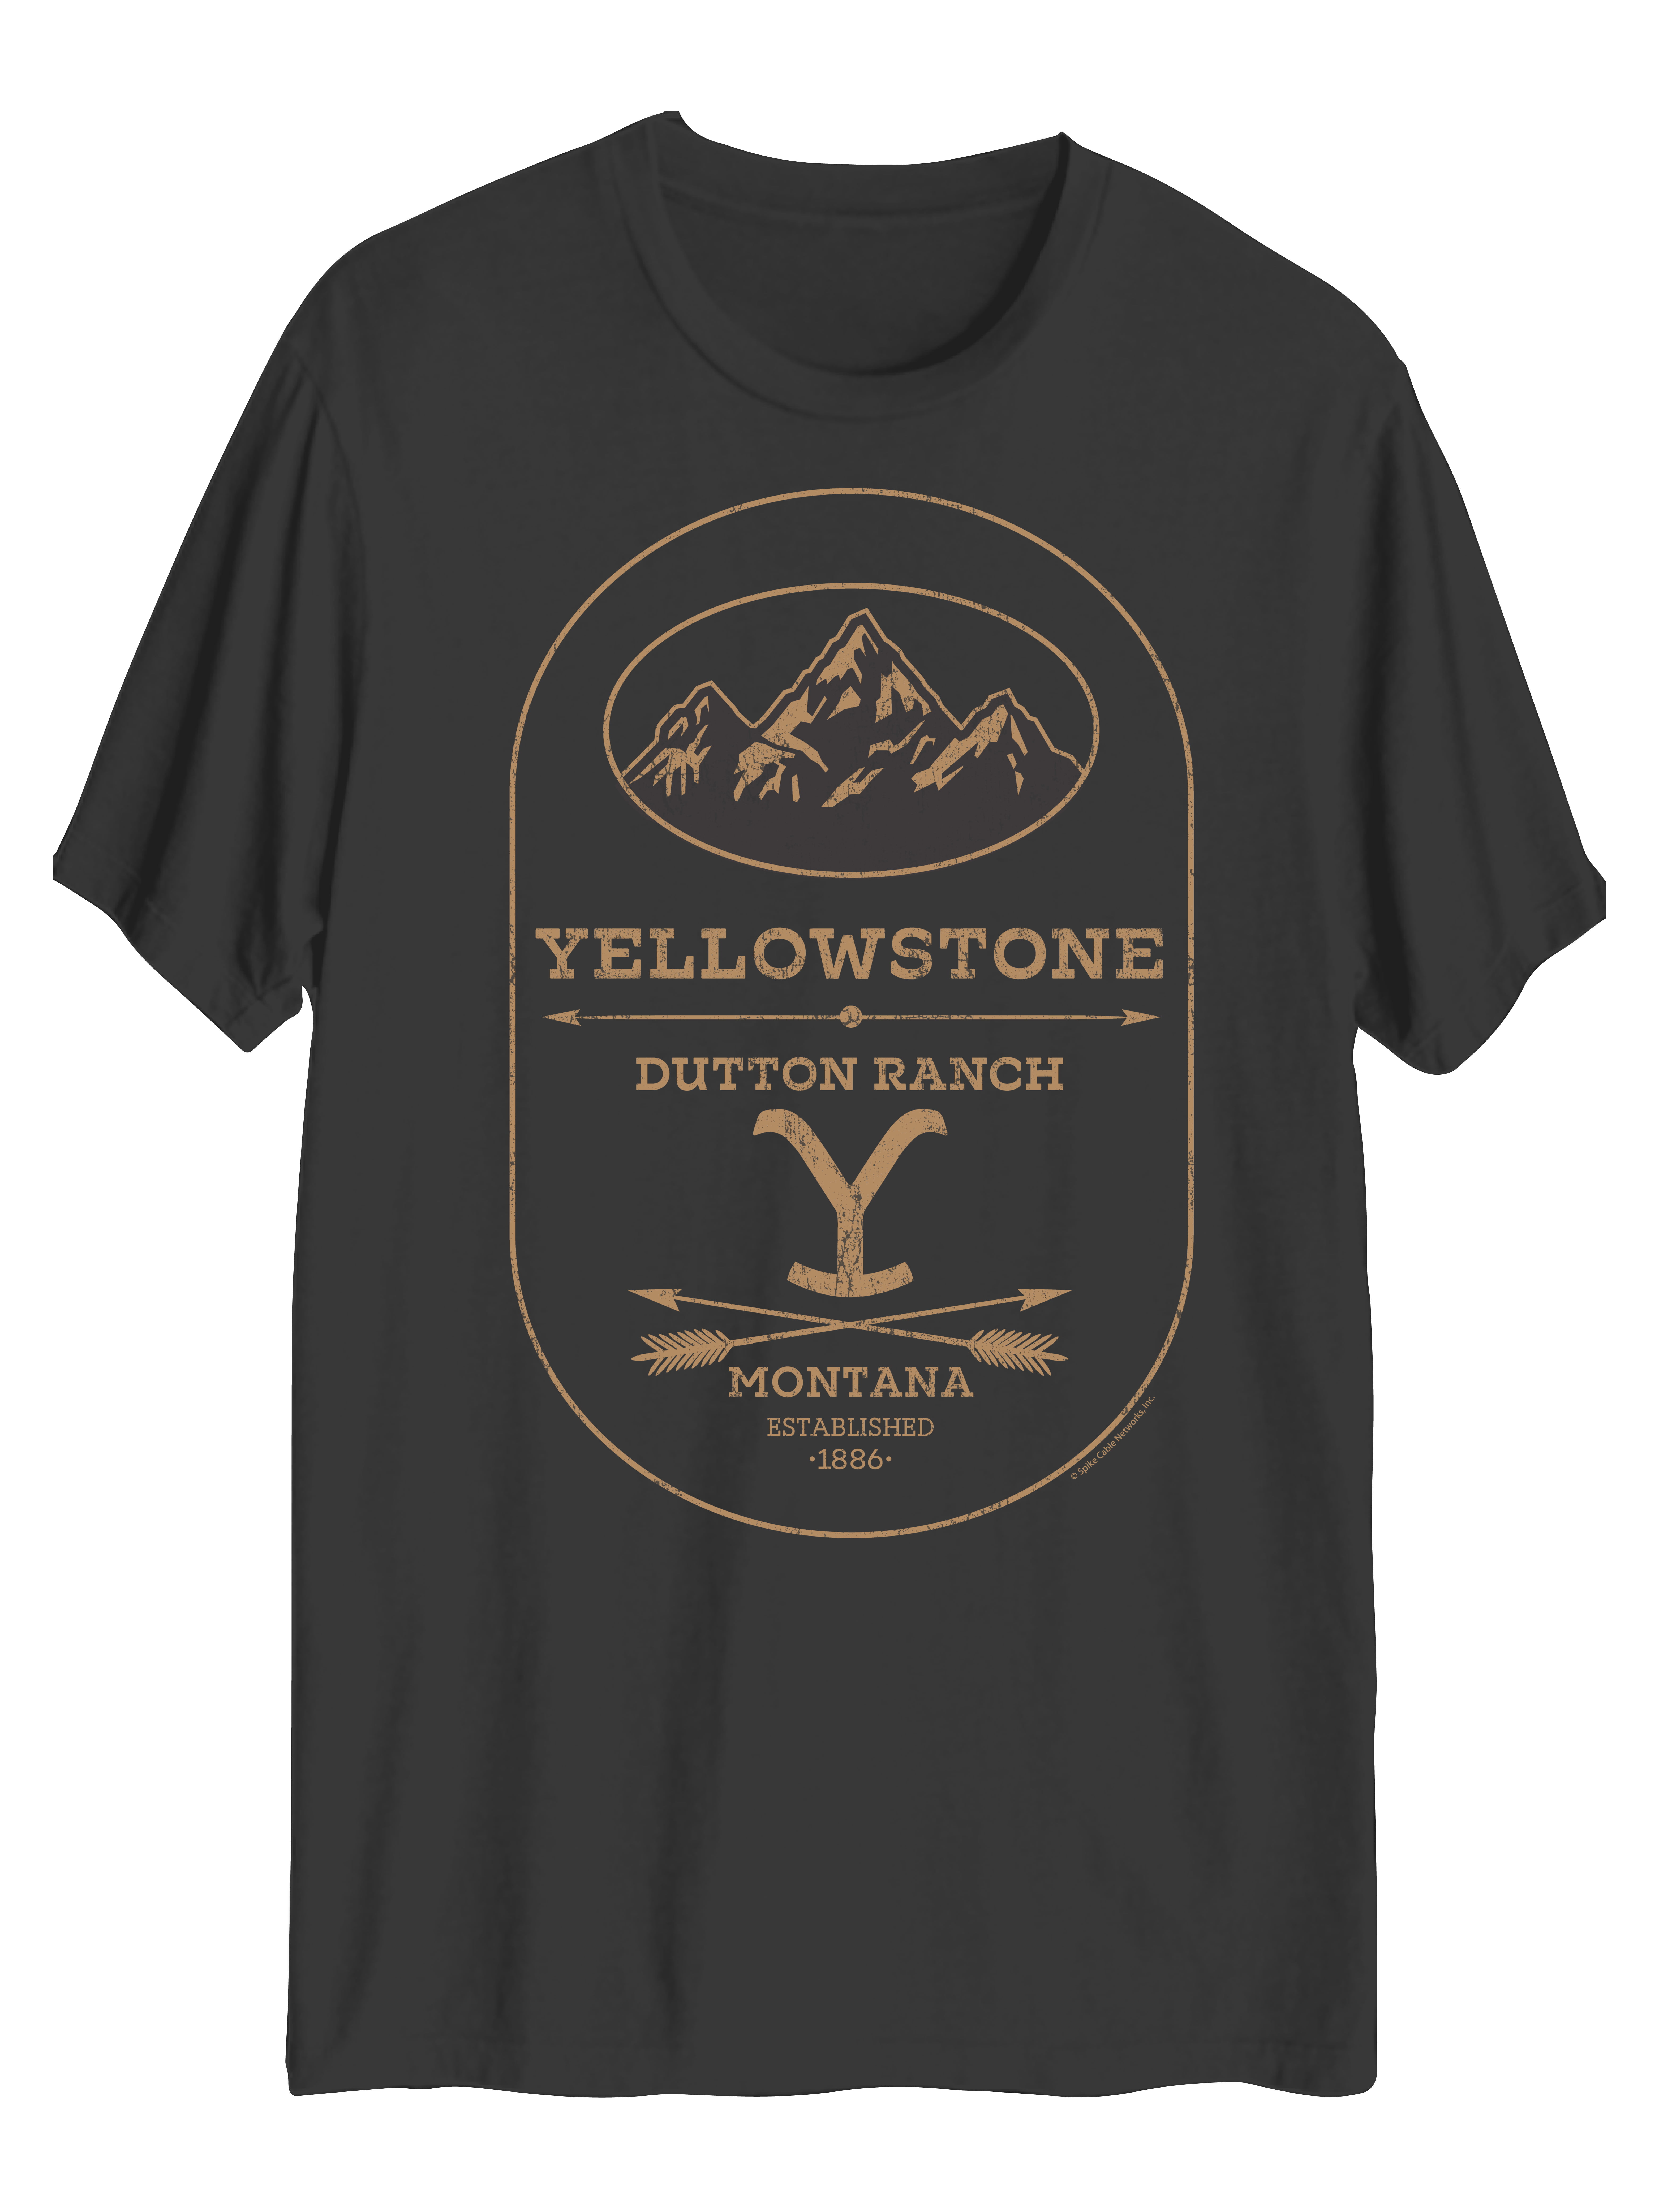 Beth Dutton is My Spirit Animal Tee Shirt Graphic Tee T-Shirt Yellowstone